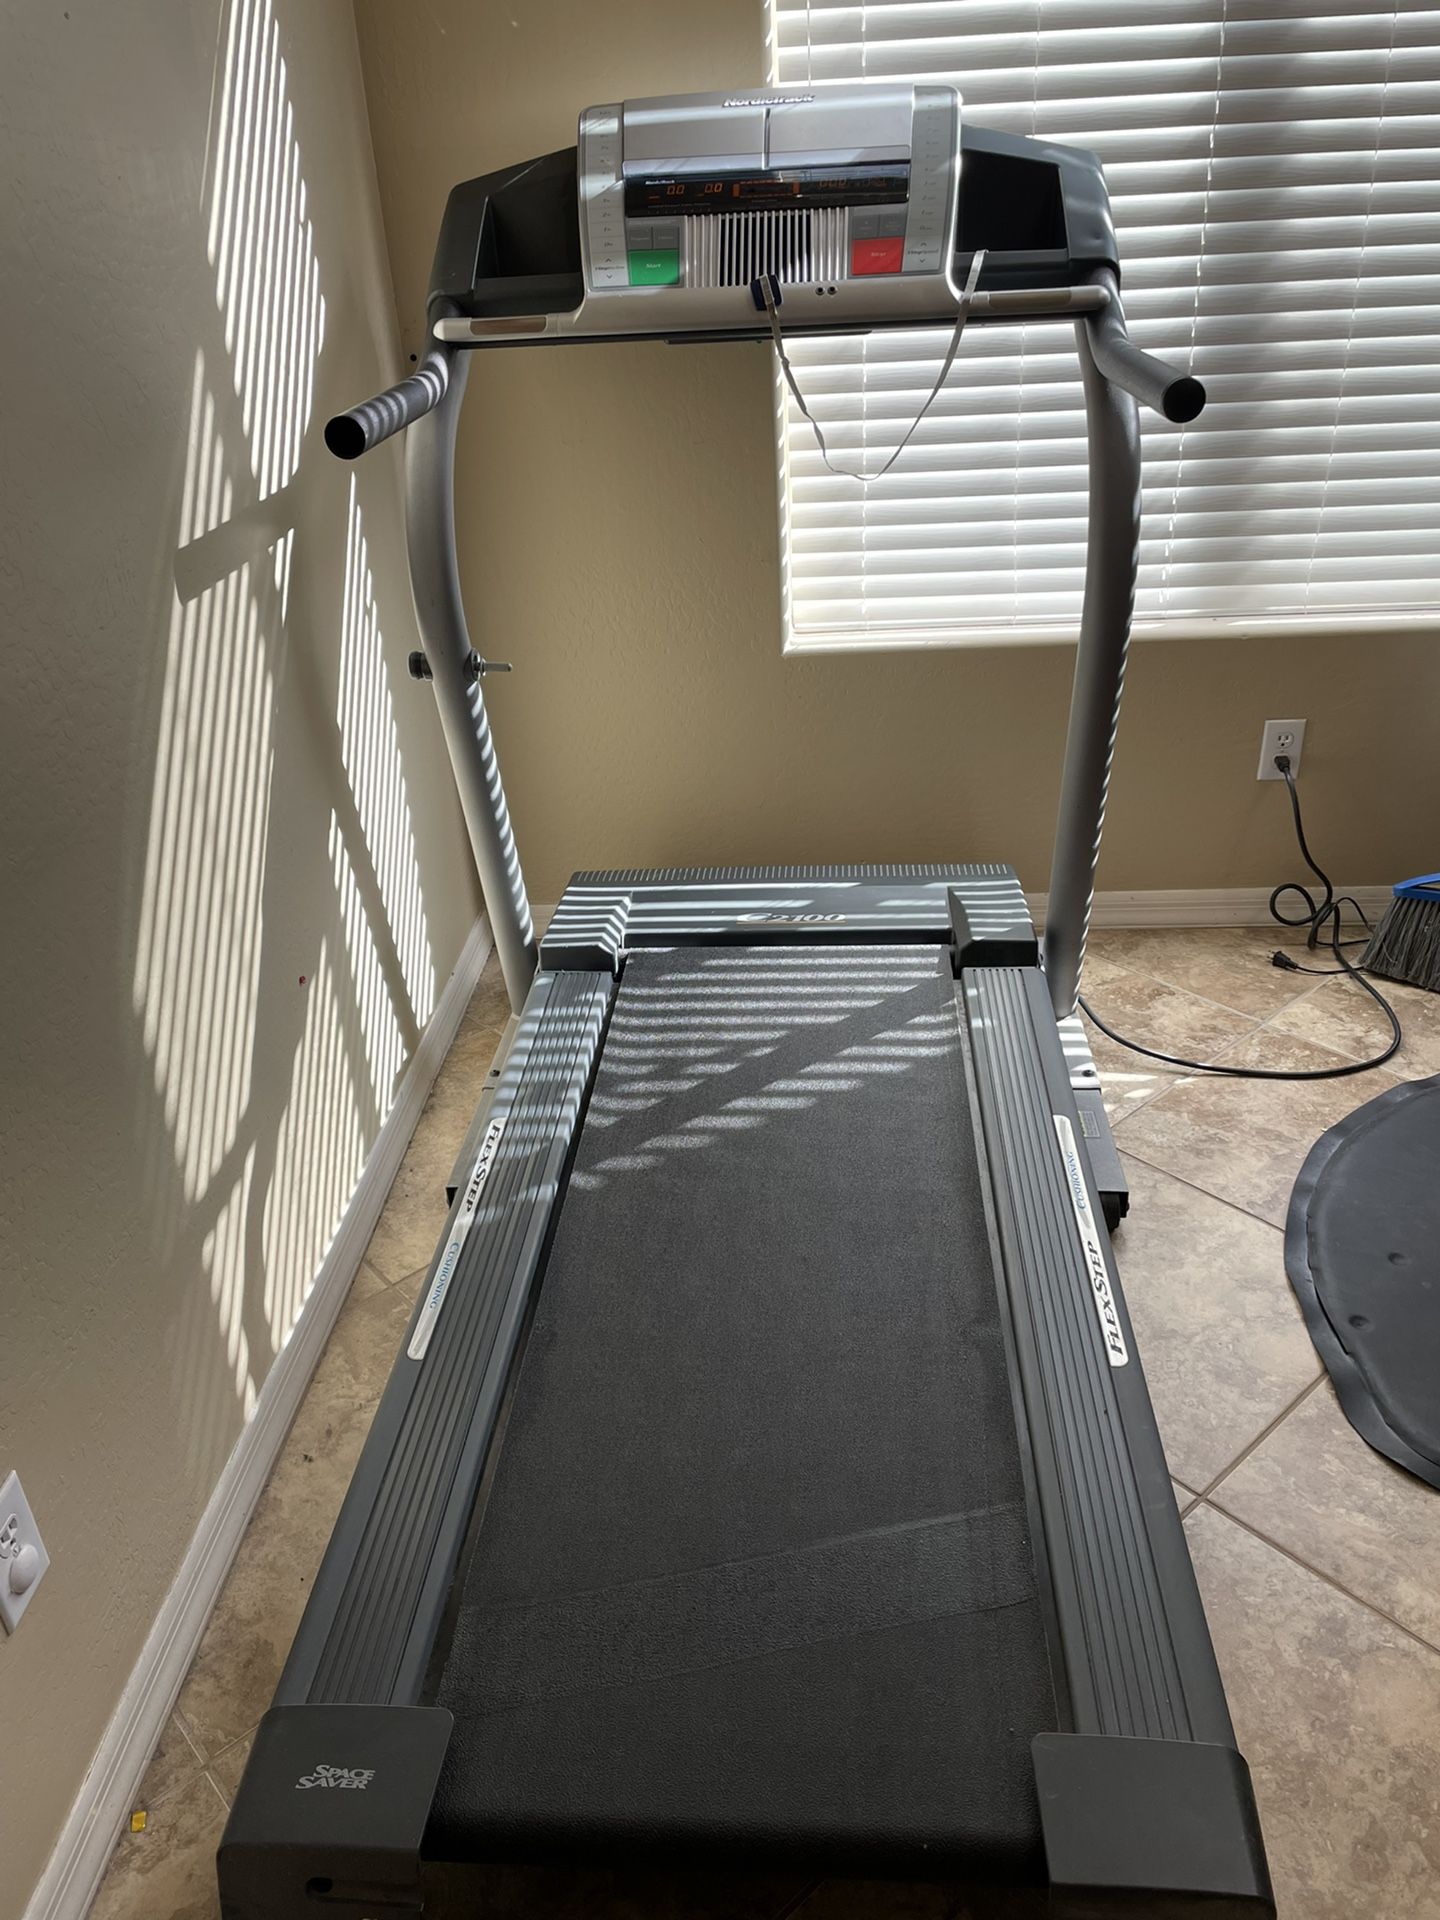 NordicTrack Solaris Treadmill